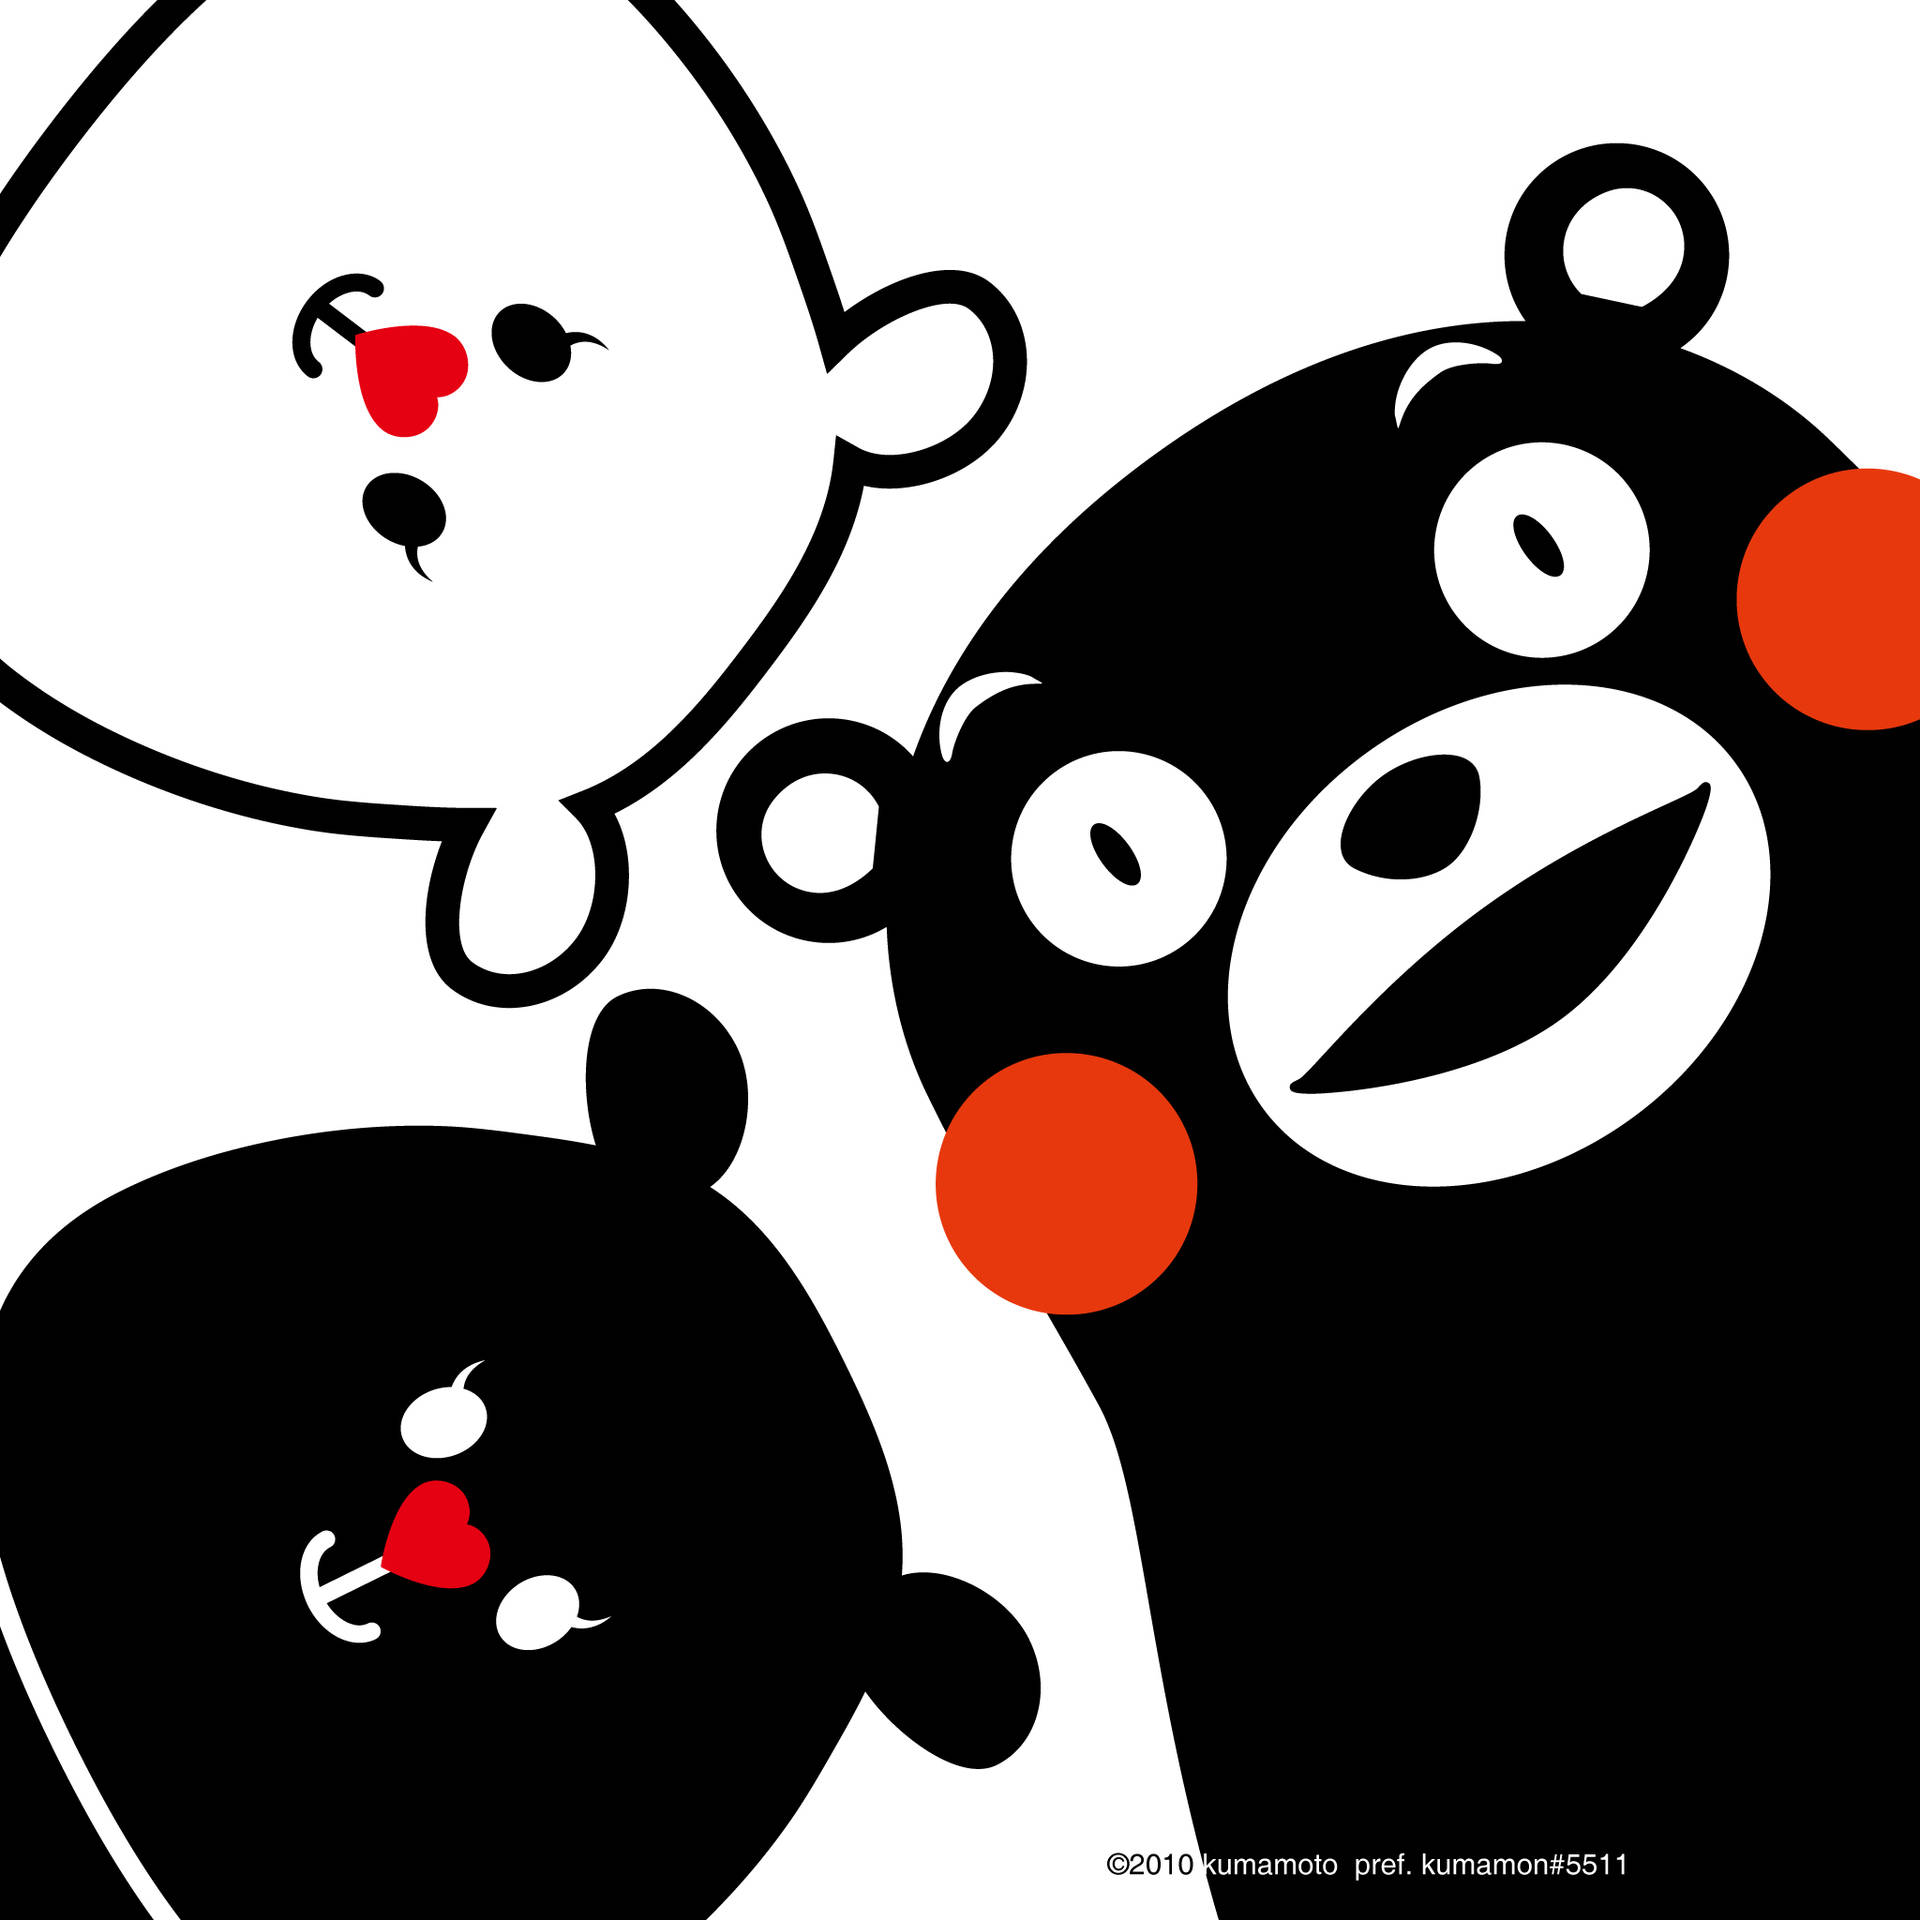 Kumamon With Two Cartoon Bears